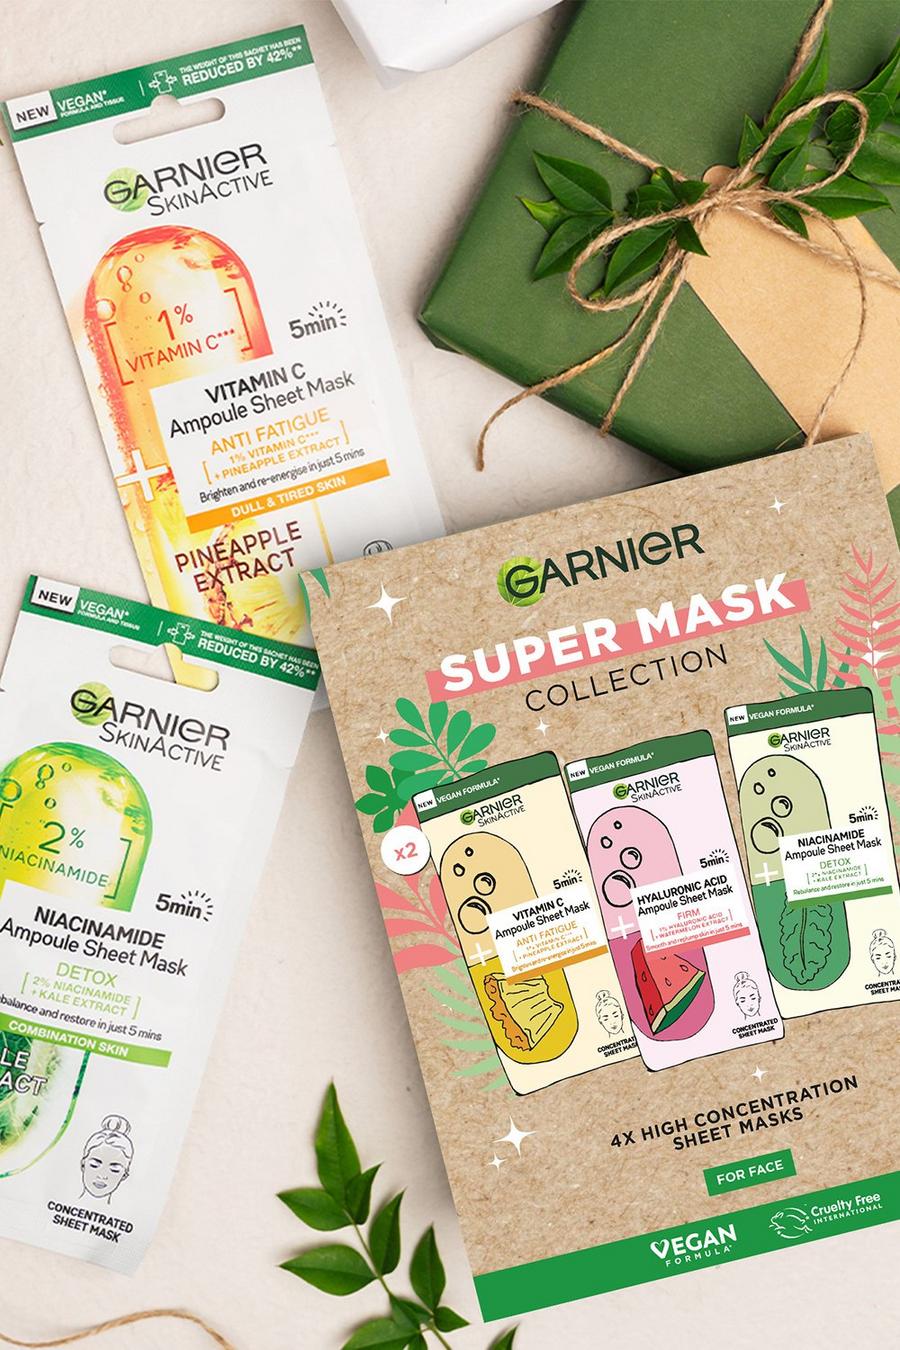 Green grün Garnier Super Mask Collection Gift Set